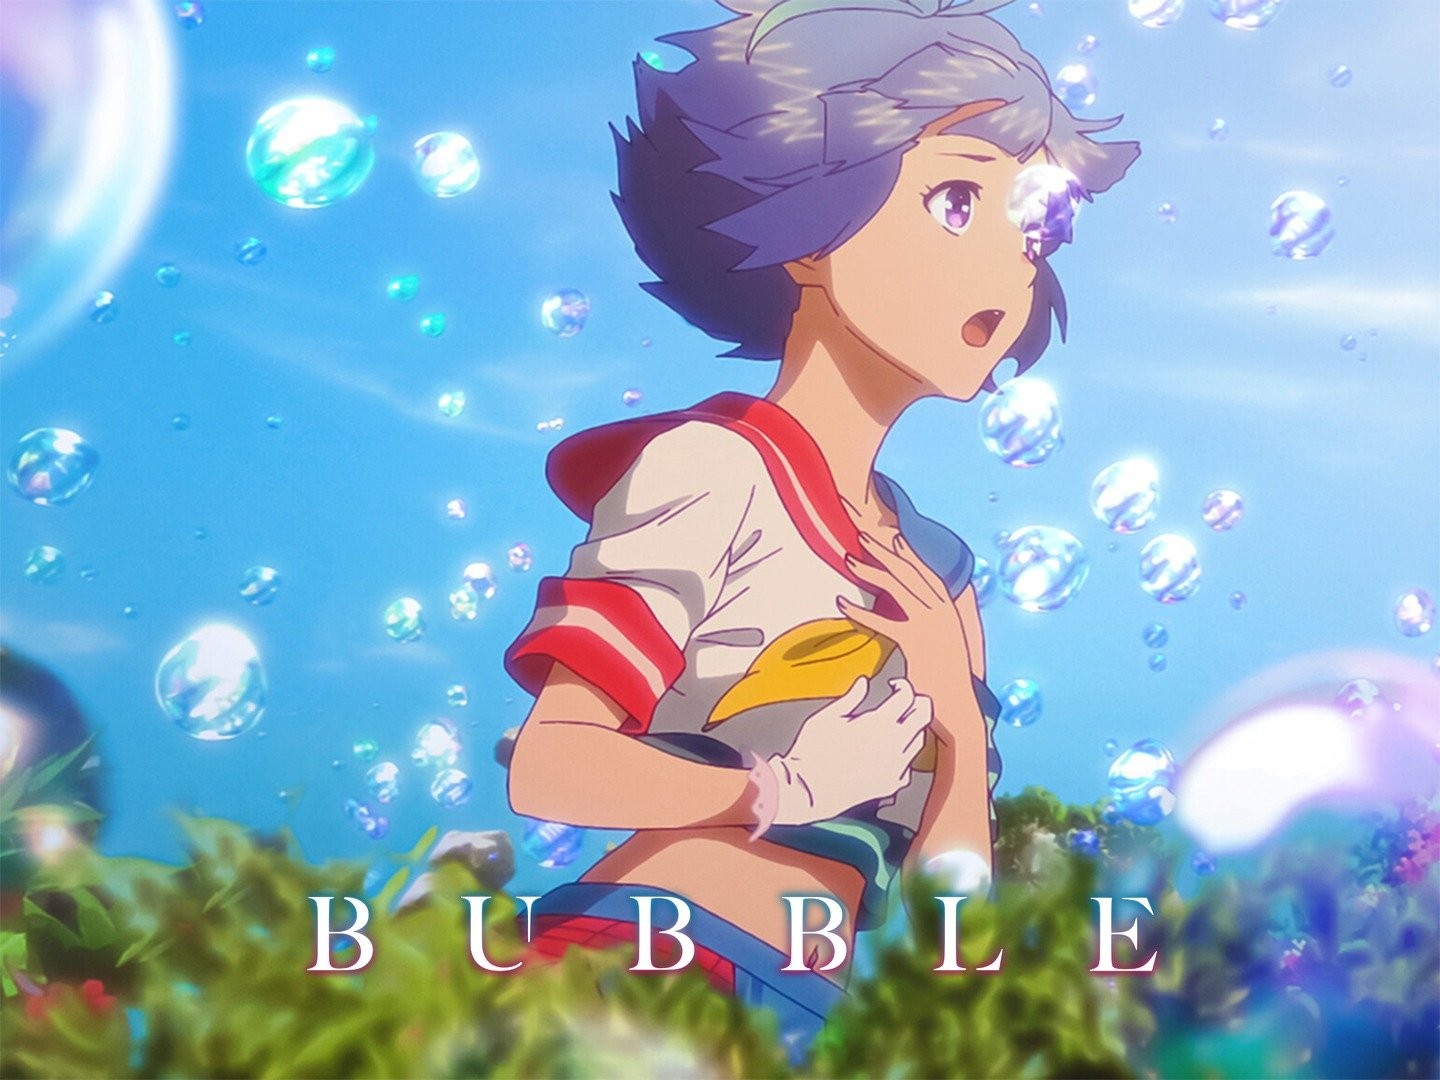 Bubble anime film//hibiki//uta  Anime films, Anime movies, Anime